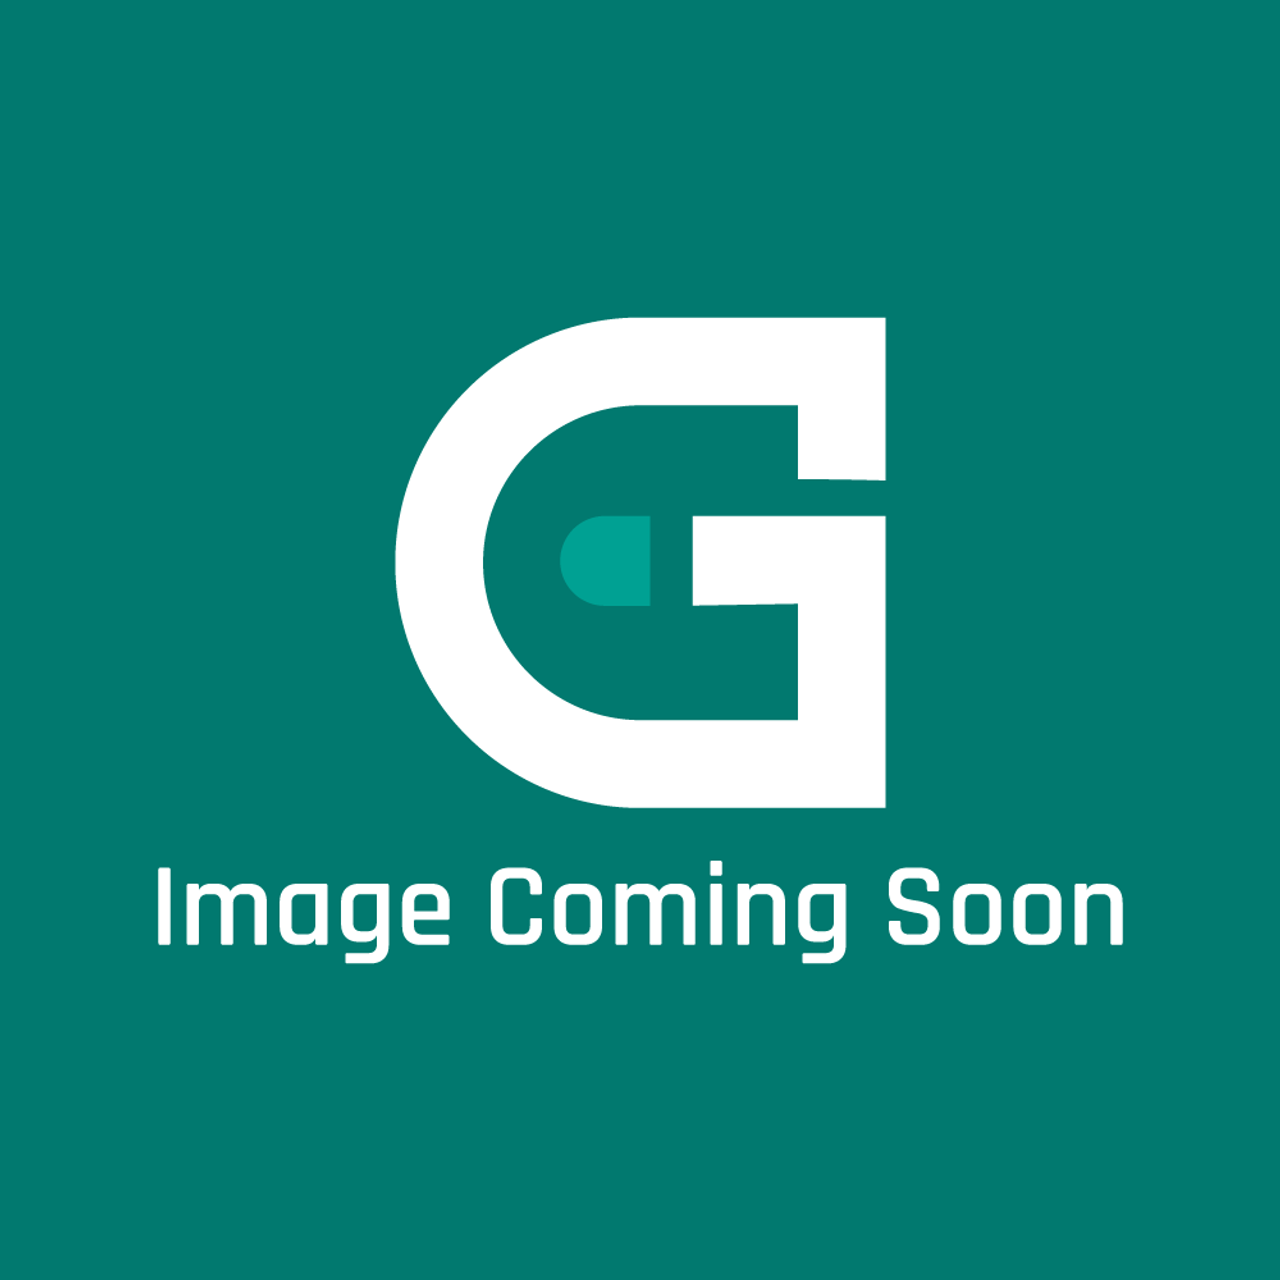 GE Appliances 23C23 - 107003-15 C0 Zp51K7E-Pfv R410A/230/1 - Image Coming Soon!